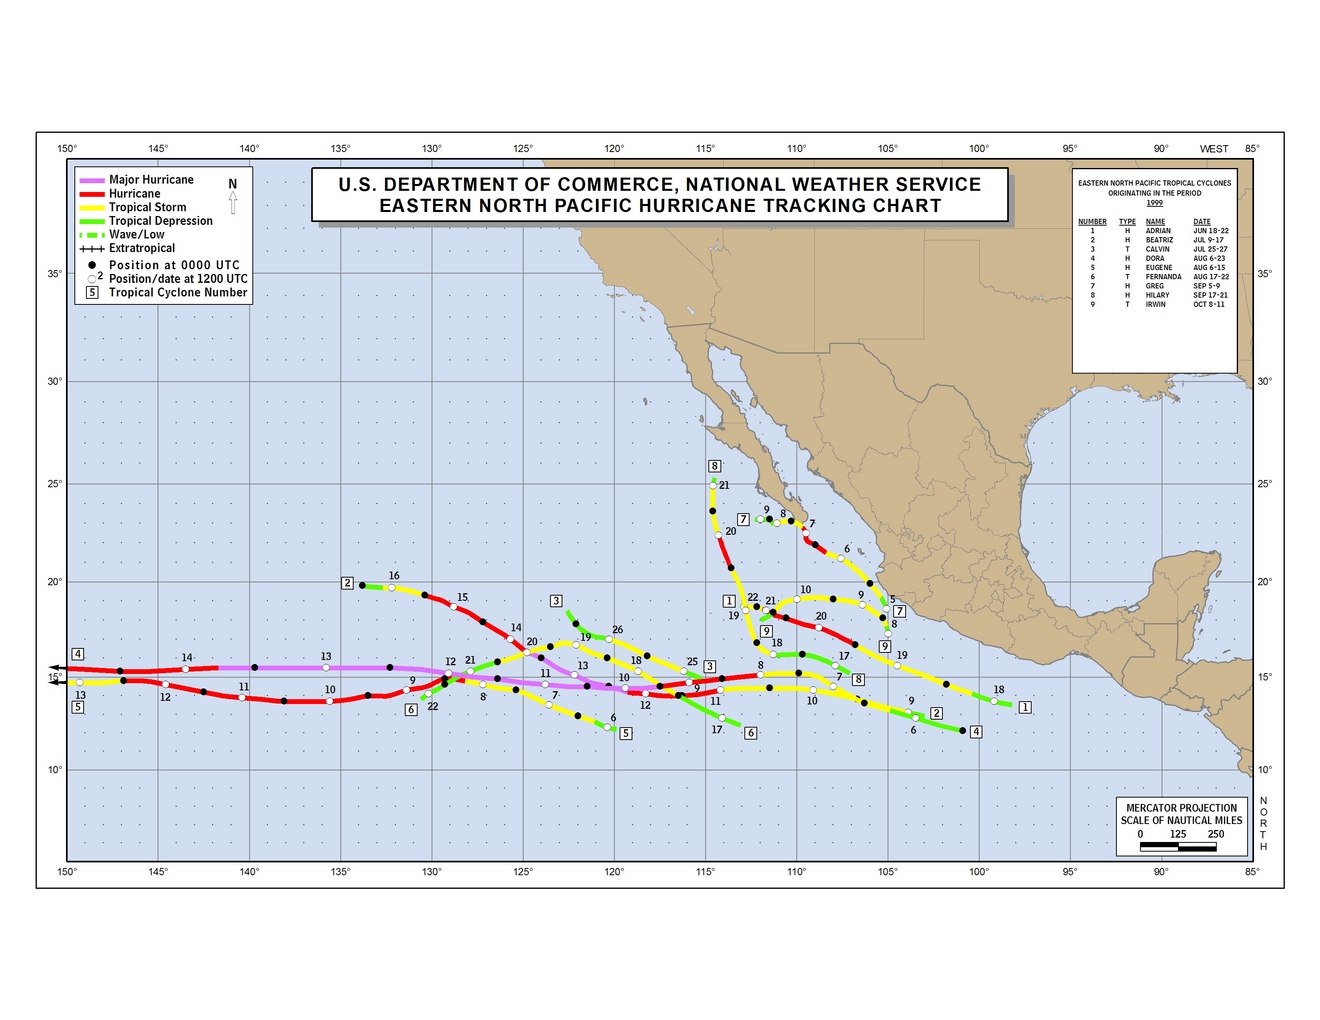 1999 Eastern Pacific hurricane season track map